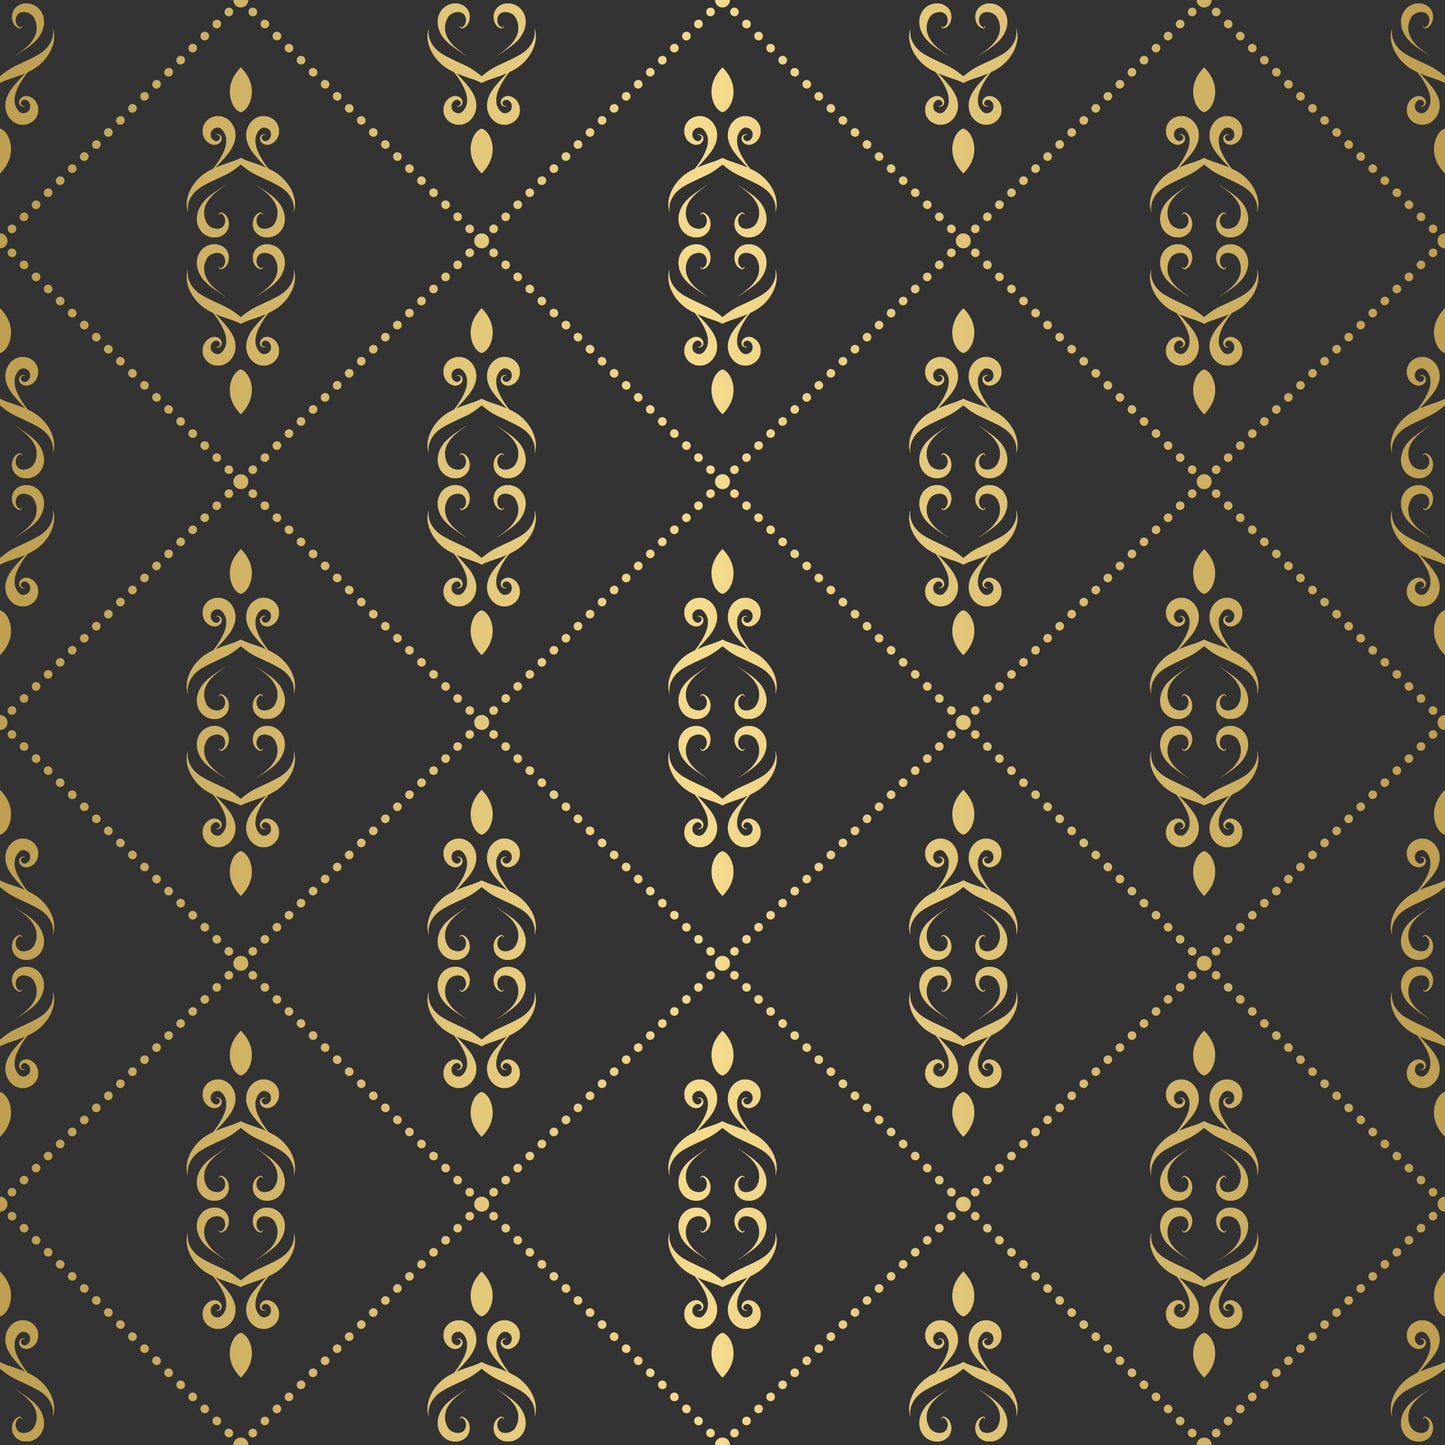 Elegant luxury vintage damask abstract floral seamless pattern design